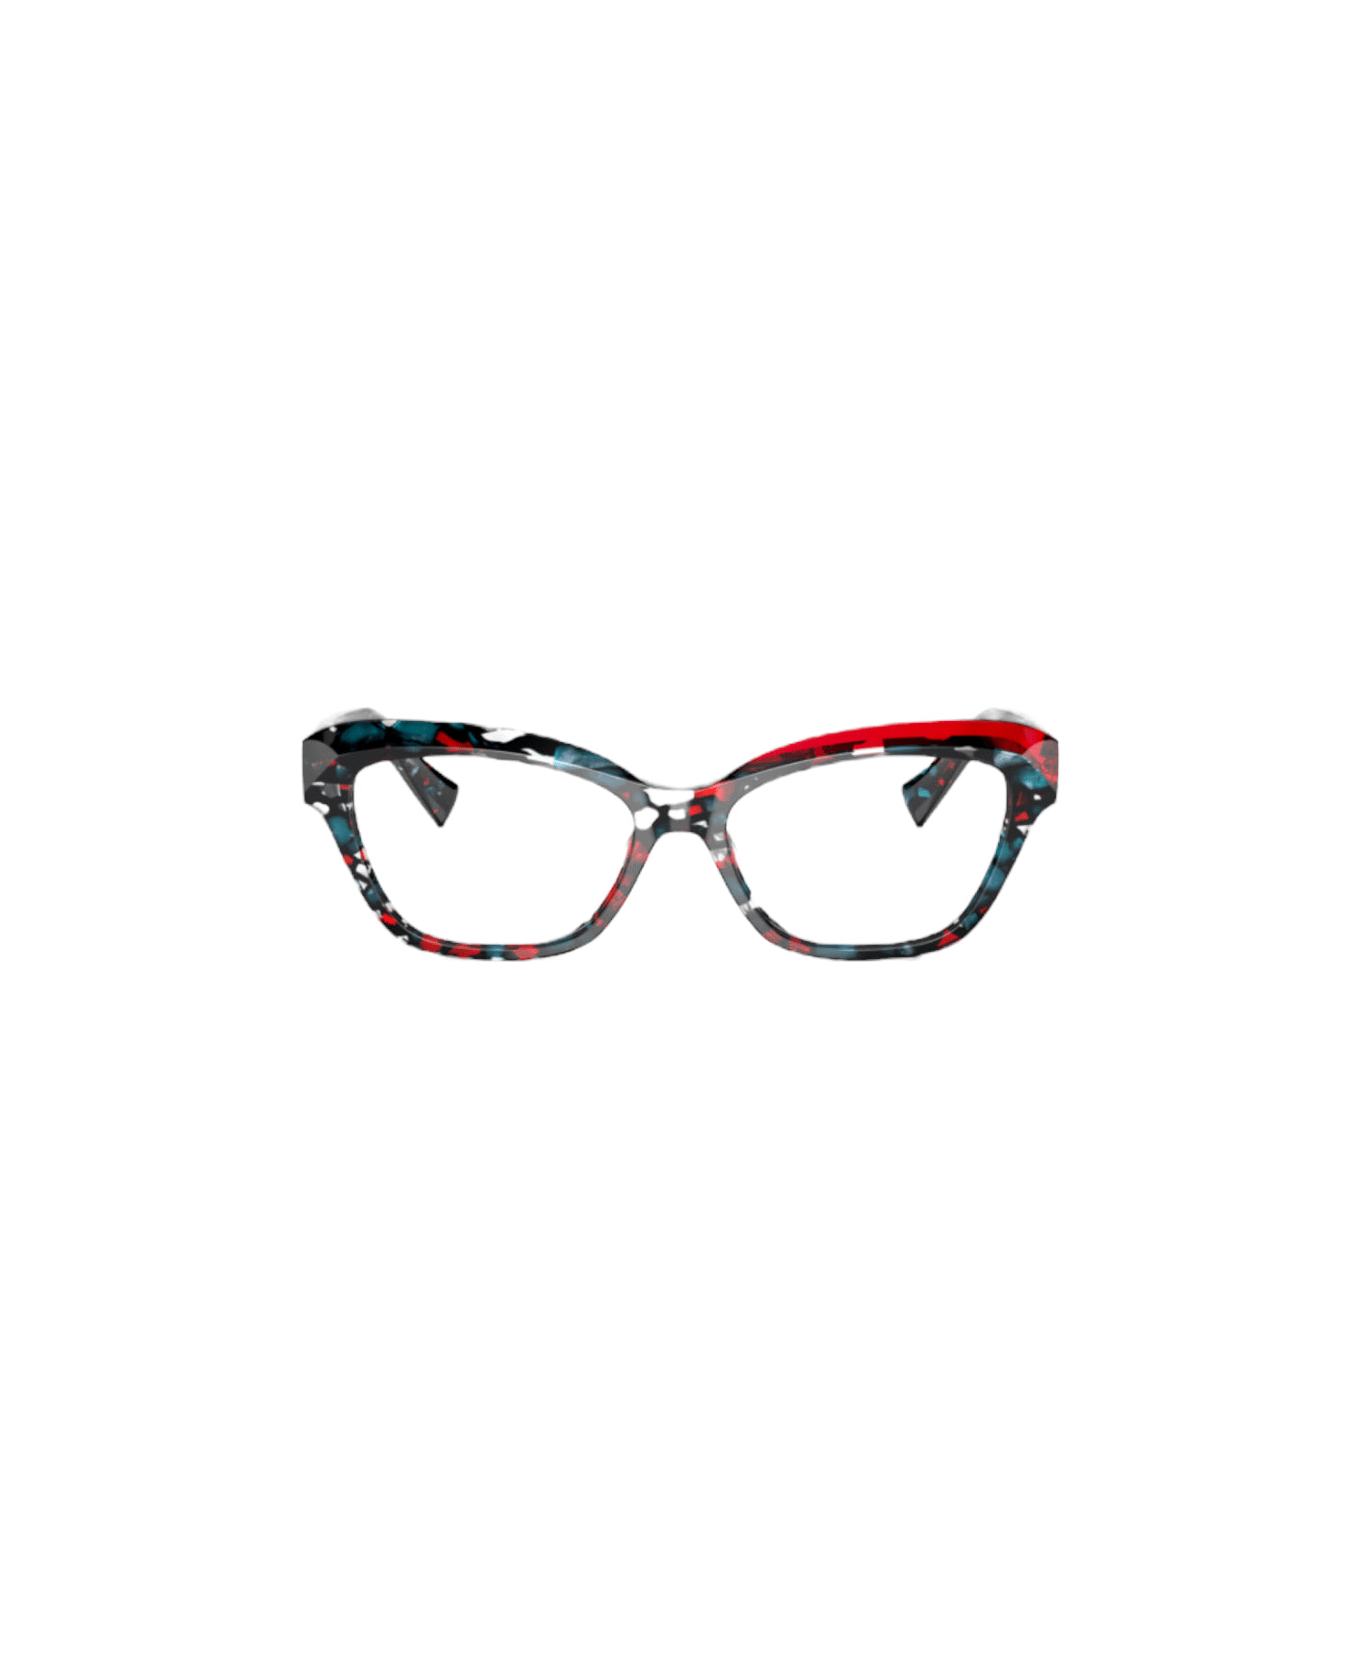 Alain Mikli Sephine - 3147 - Red/blue Glasses アイウェア